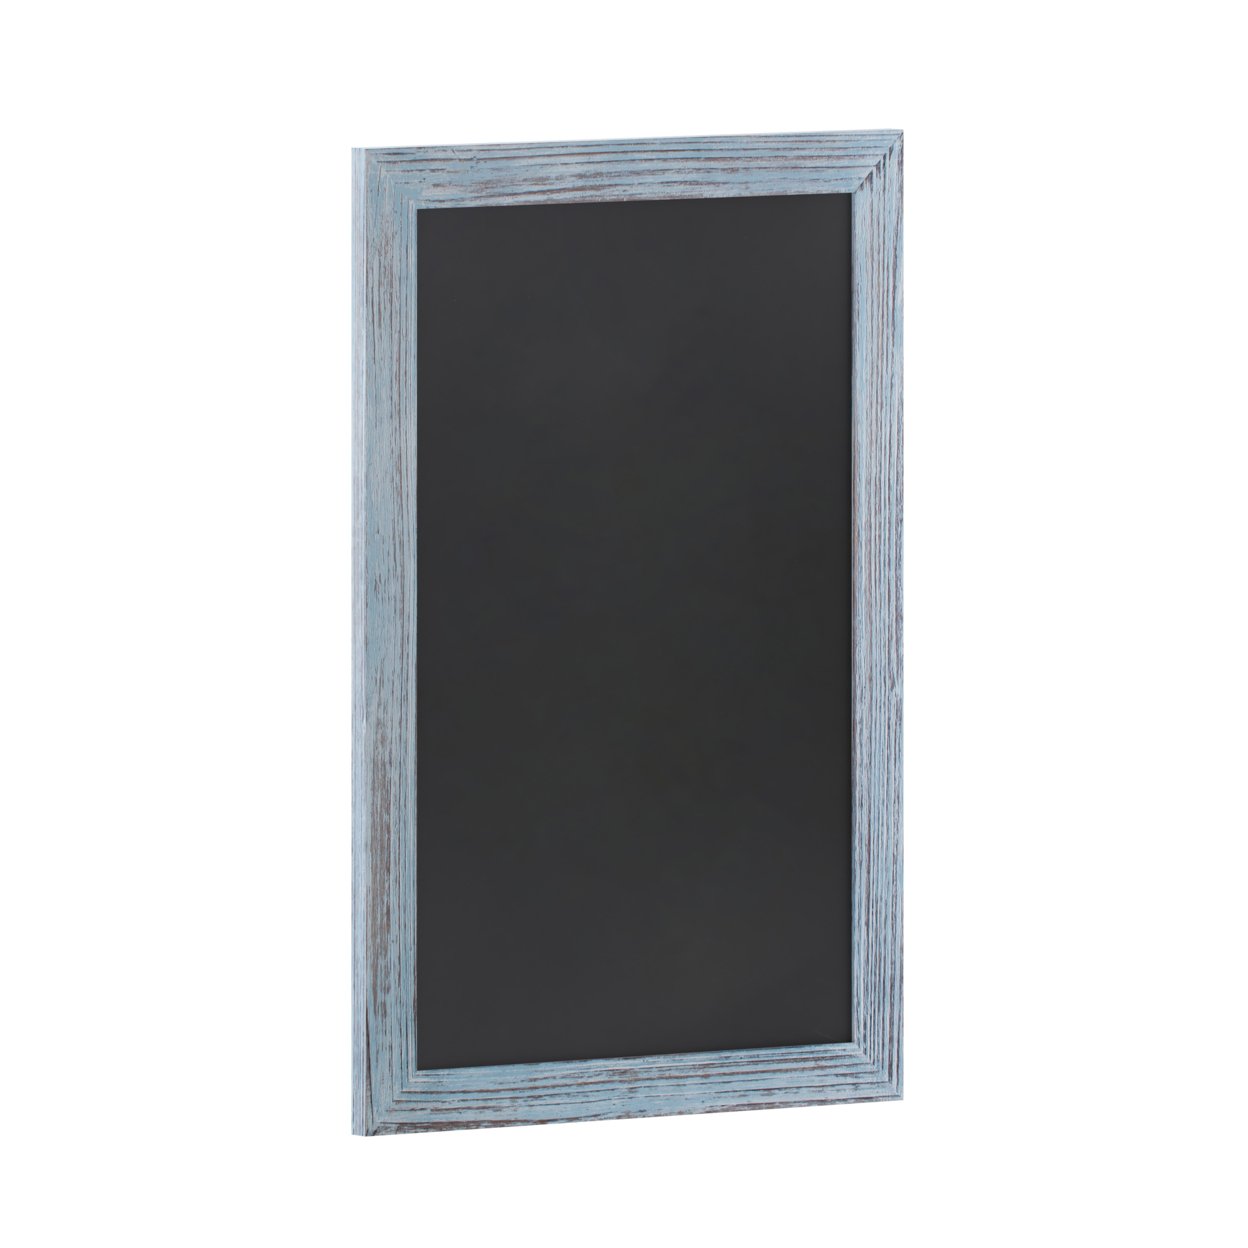 30 Inch Wall Hanging Chalkboard, Sleek Rustic Blue Wood Frame, Eraser